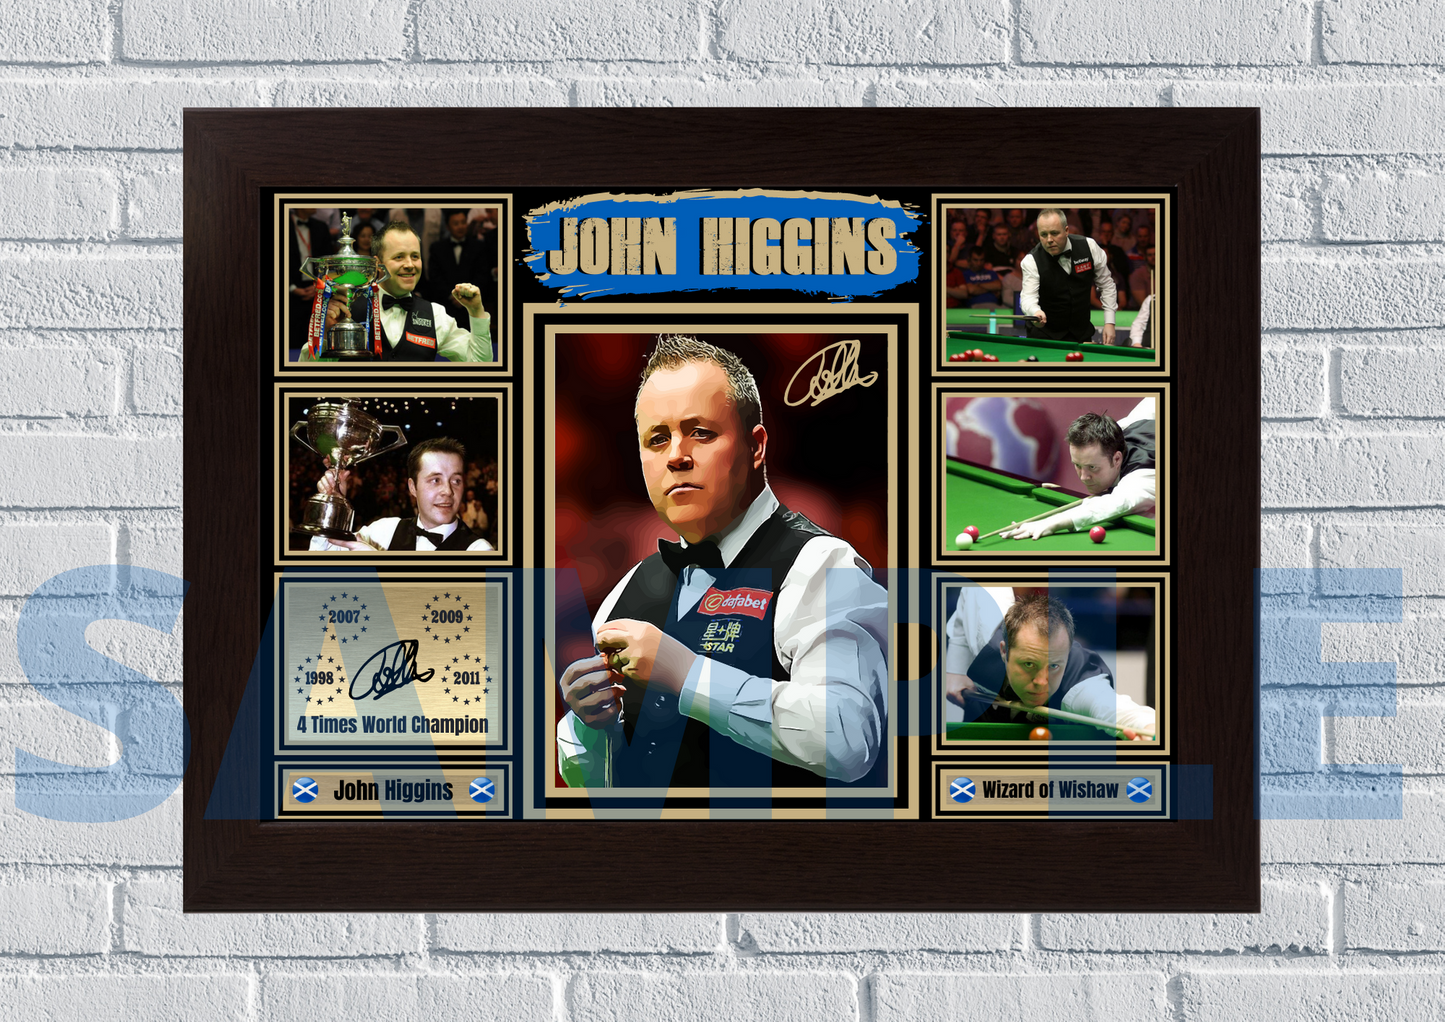 John Higgins Wizard of Wishaw (Snooker) #73 - Memorabilia/Collectable Signed print